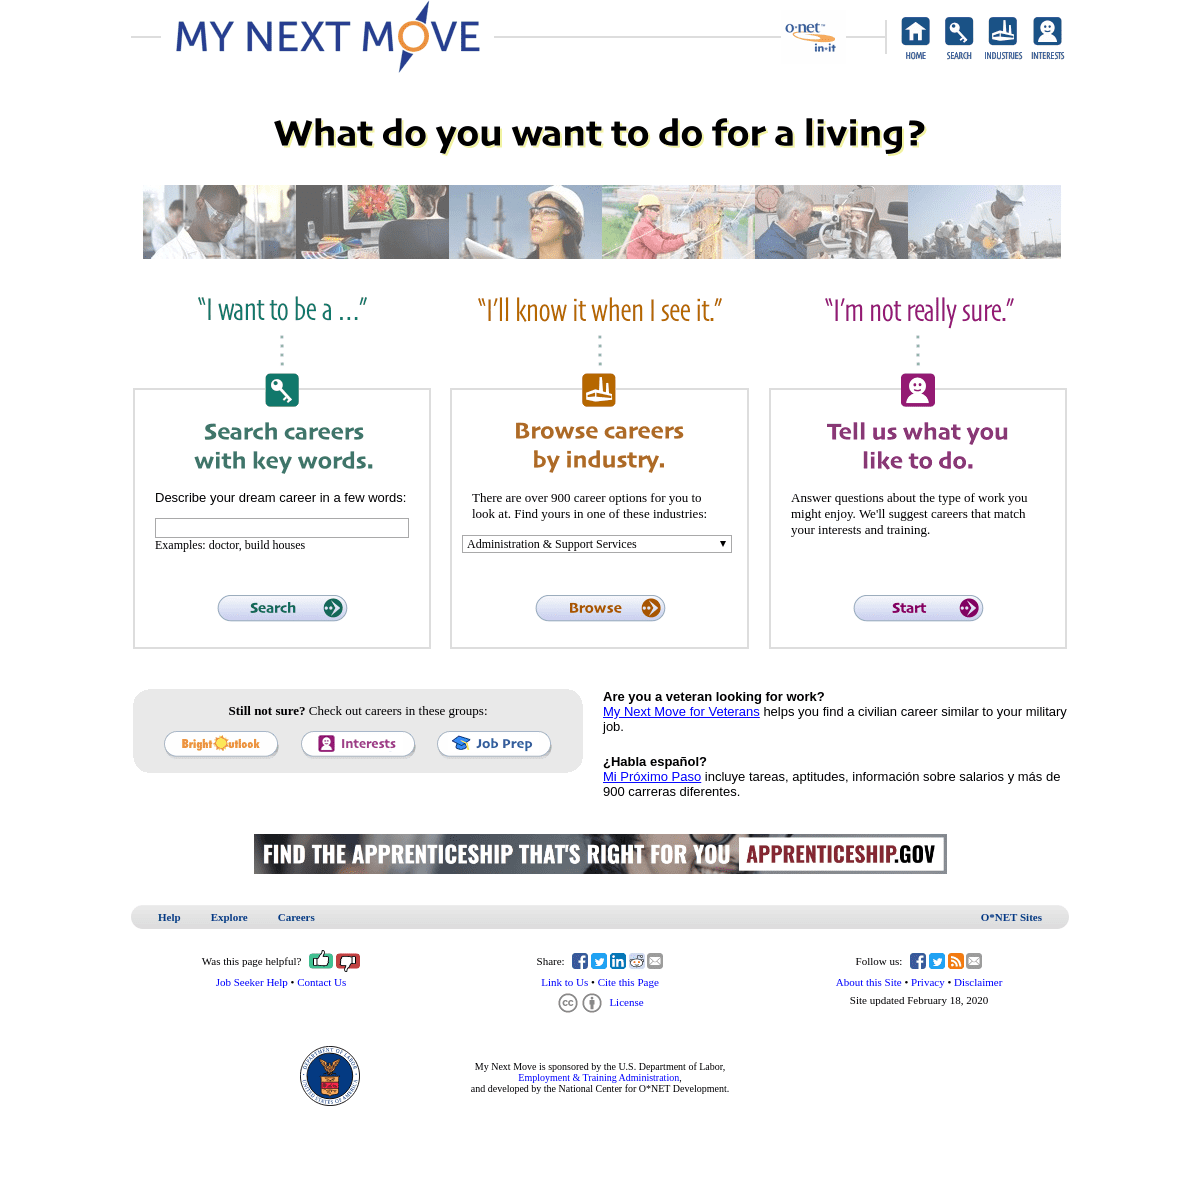 A complete backup of mynextmove.org